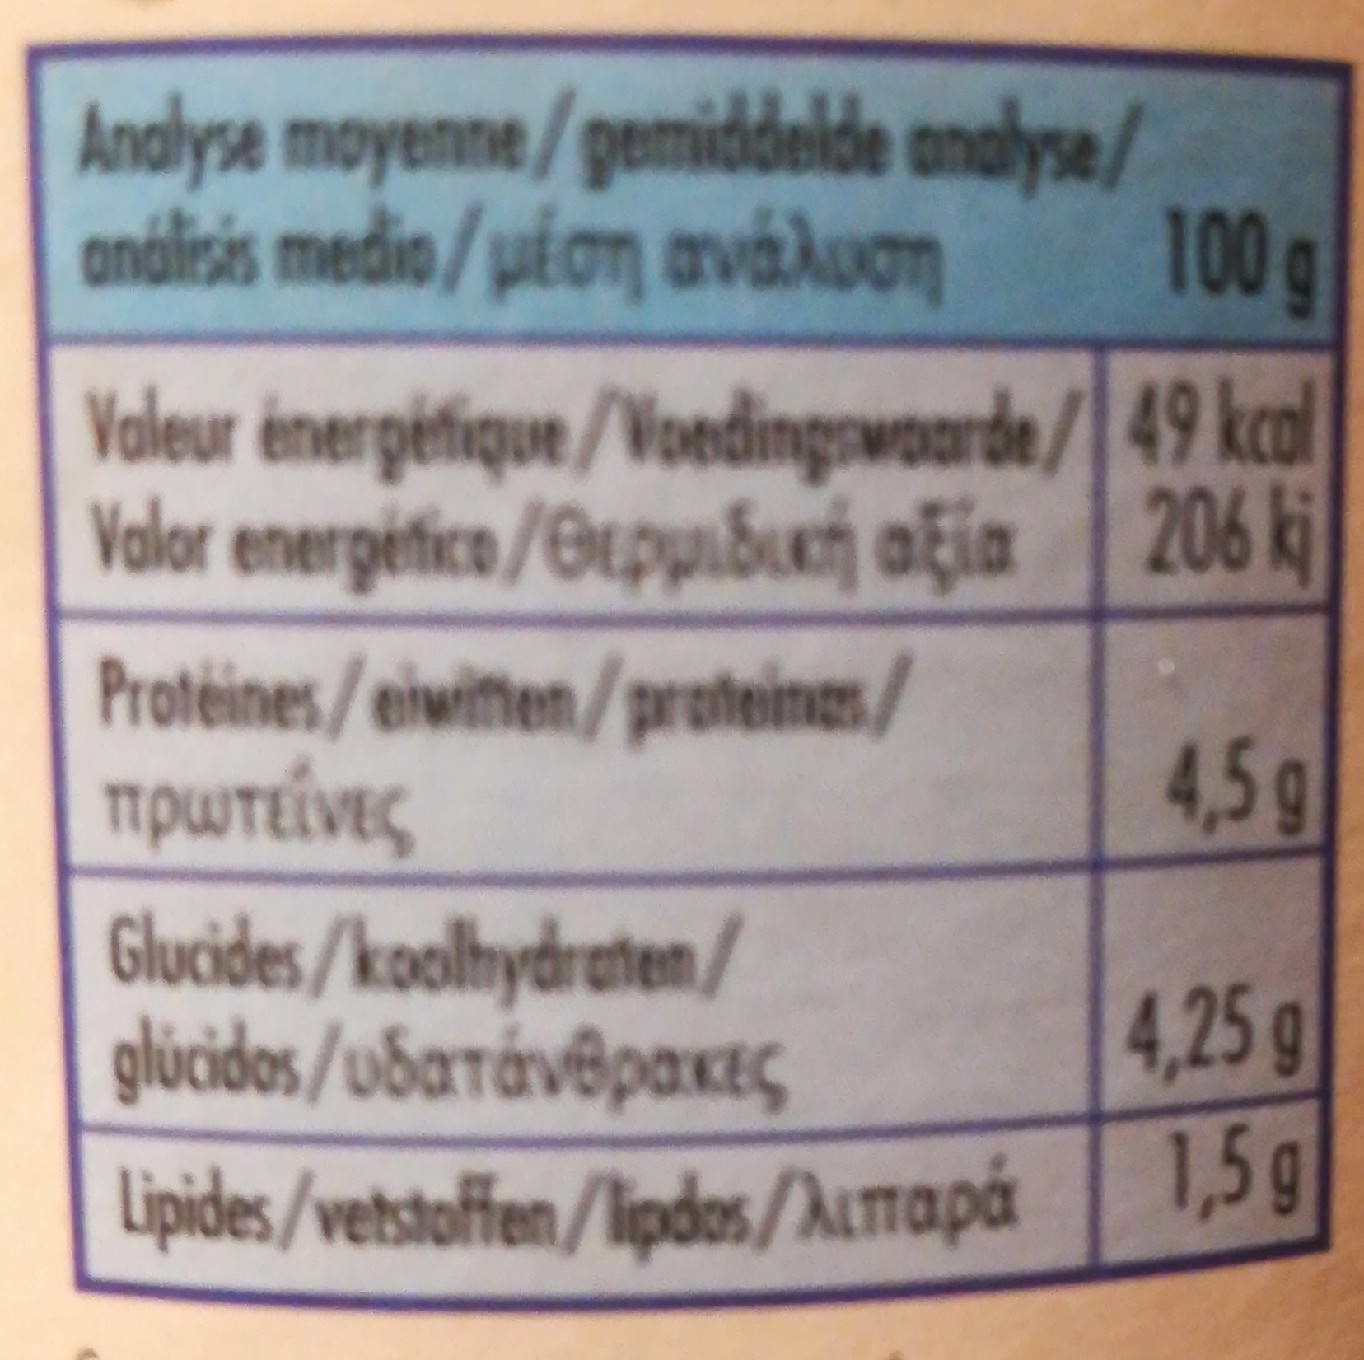 Biobio - Kefir Doux 1.5% MG - Tableau nutritionnel